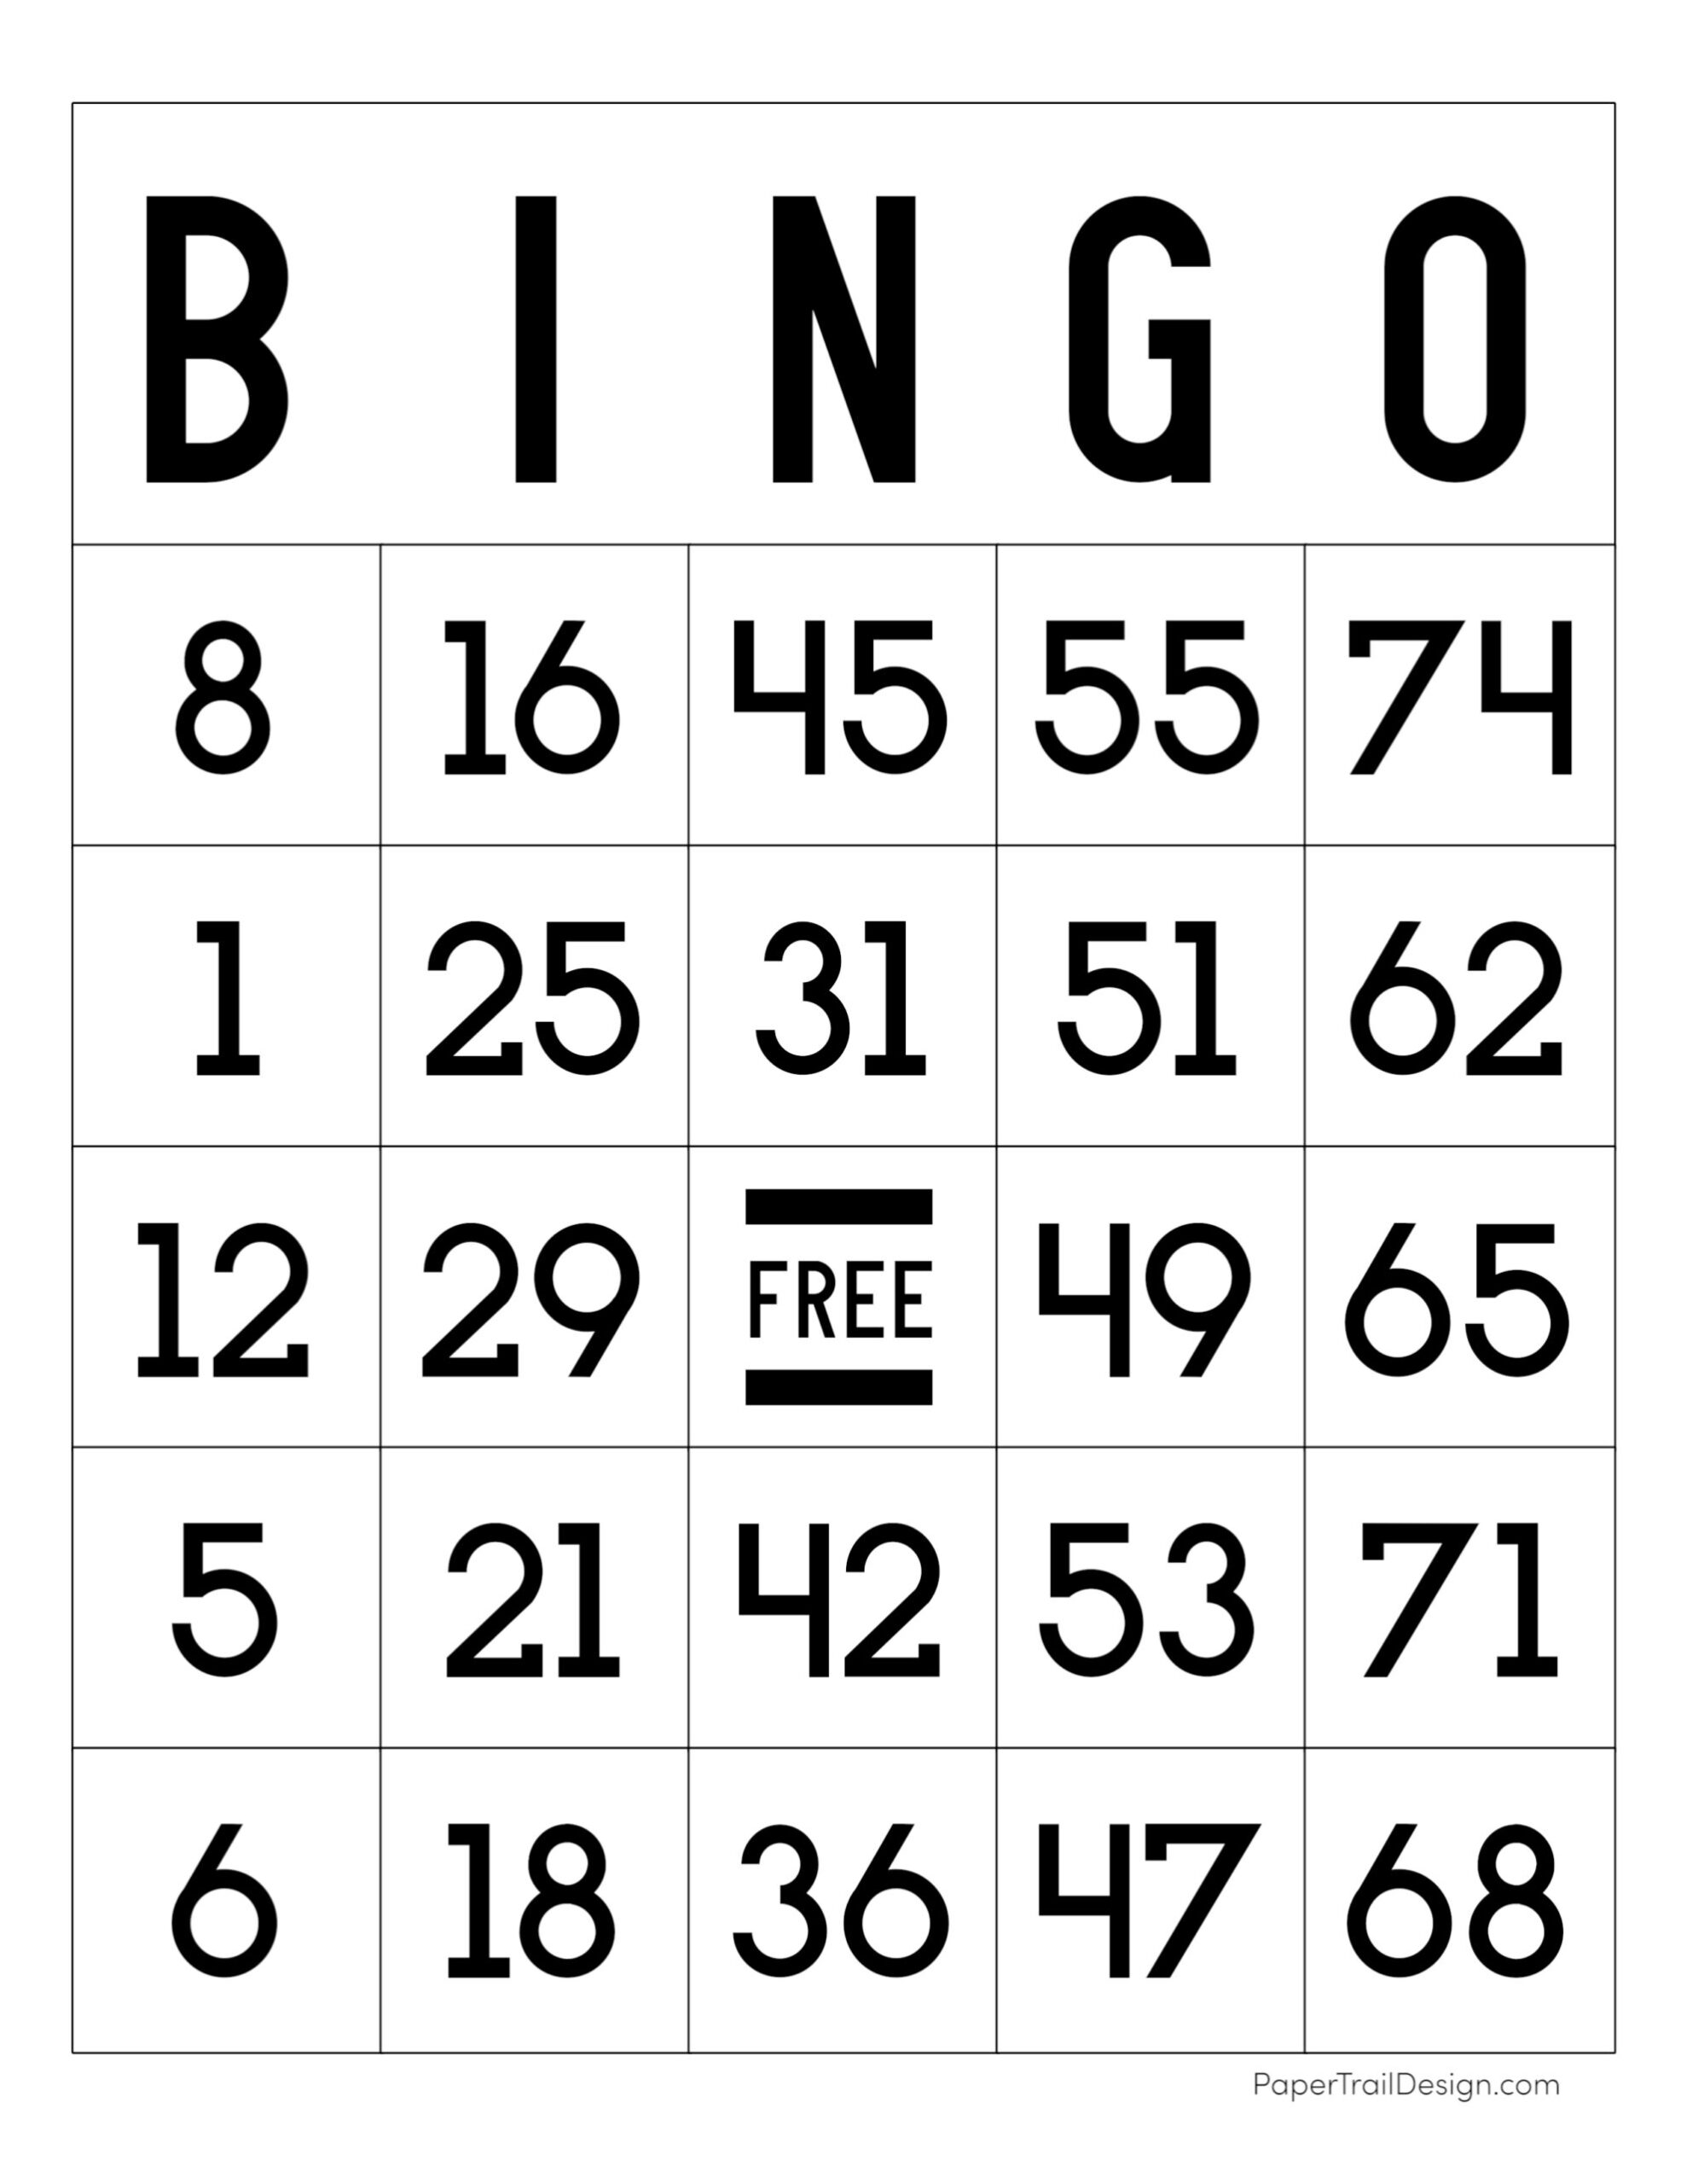 Free Printable Bingo Cards - Paper Trail Design - Free Printable Large Bingo Cards